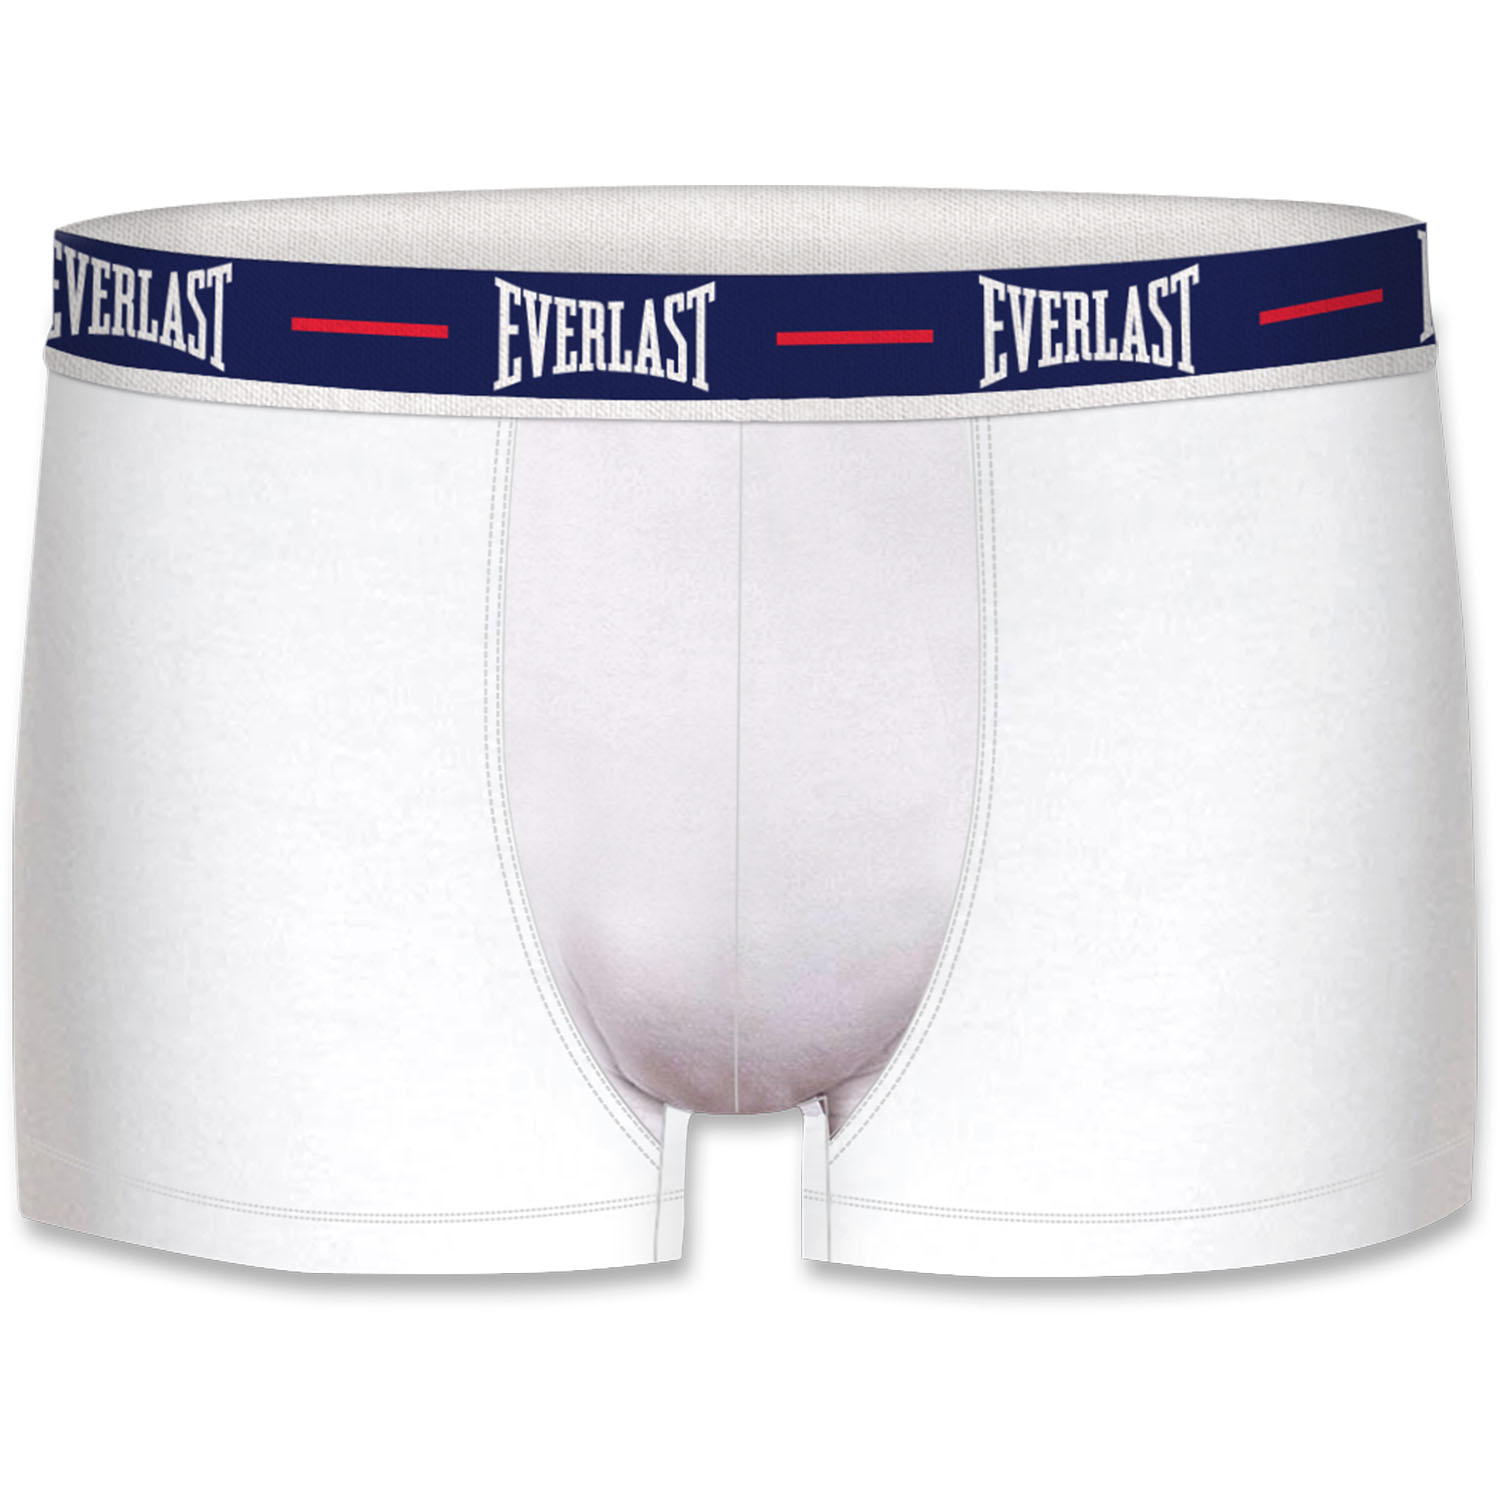 Everlast Boxershorts, AS1, white